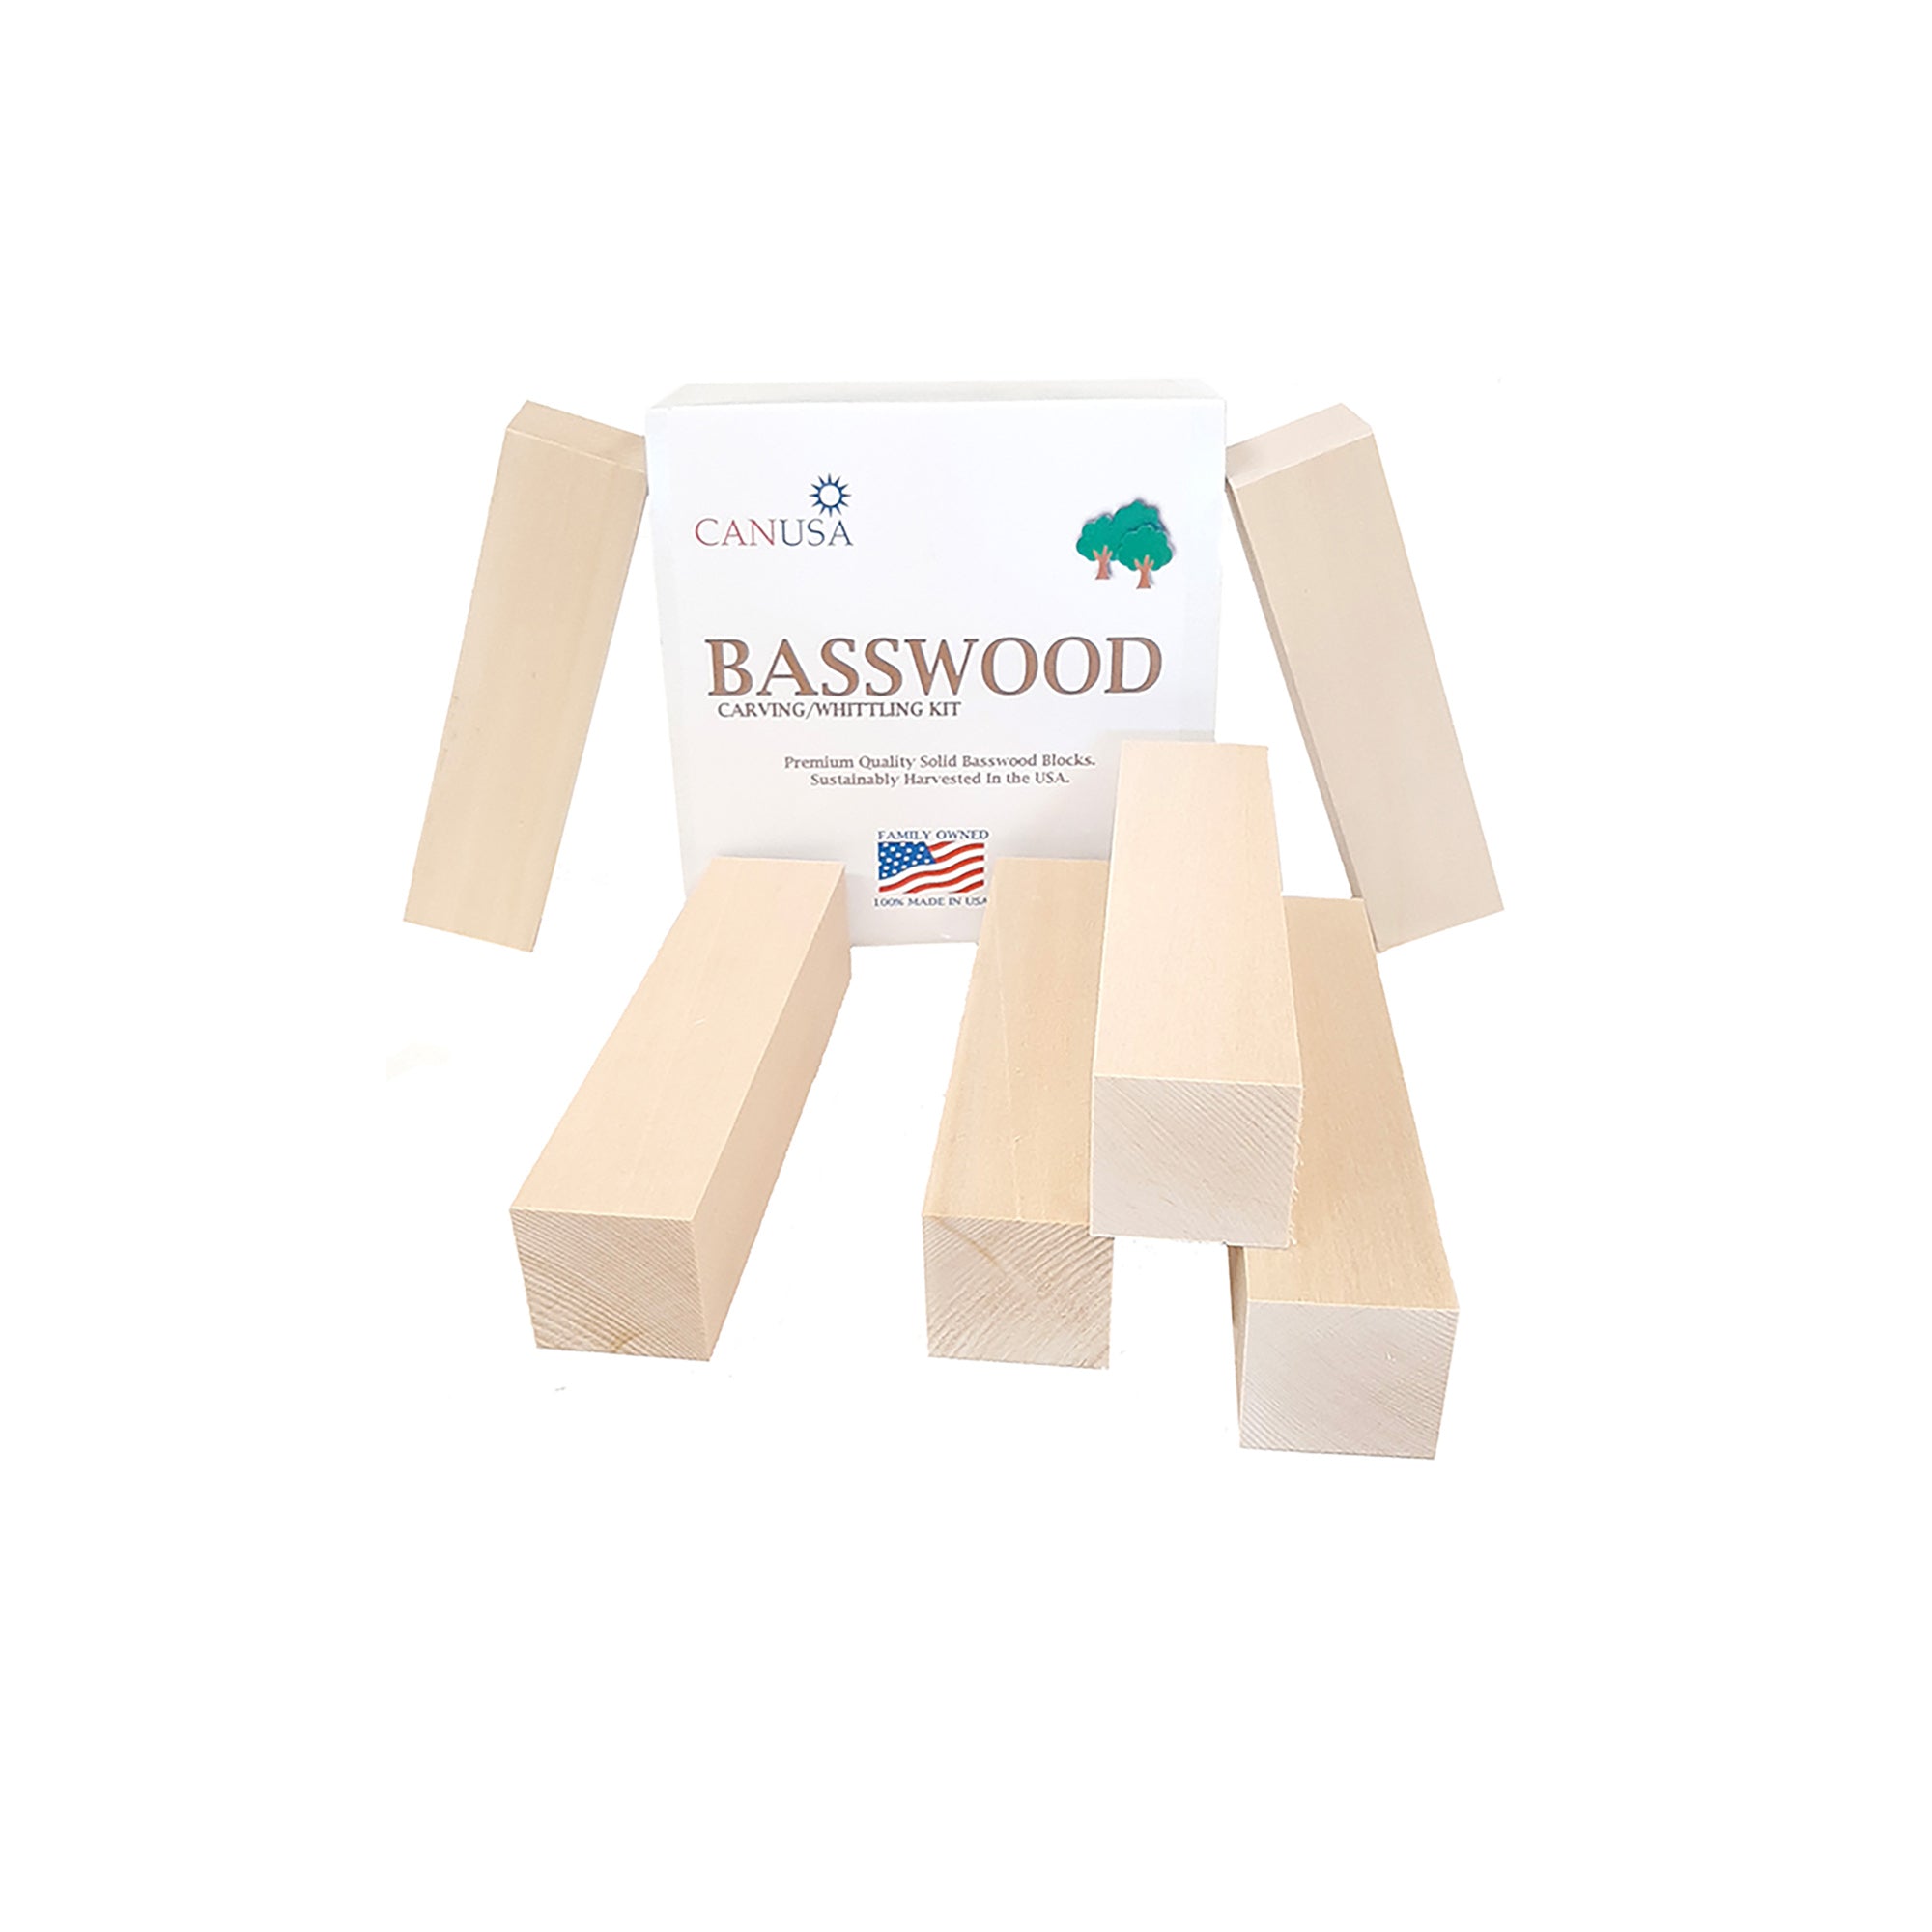 Basswood Carving Block 1-1/2 x 1-1/2 x 4